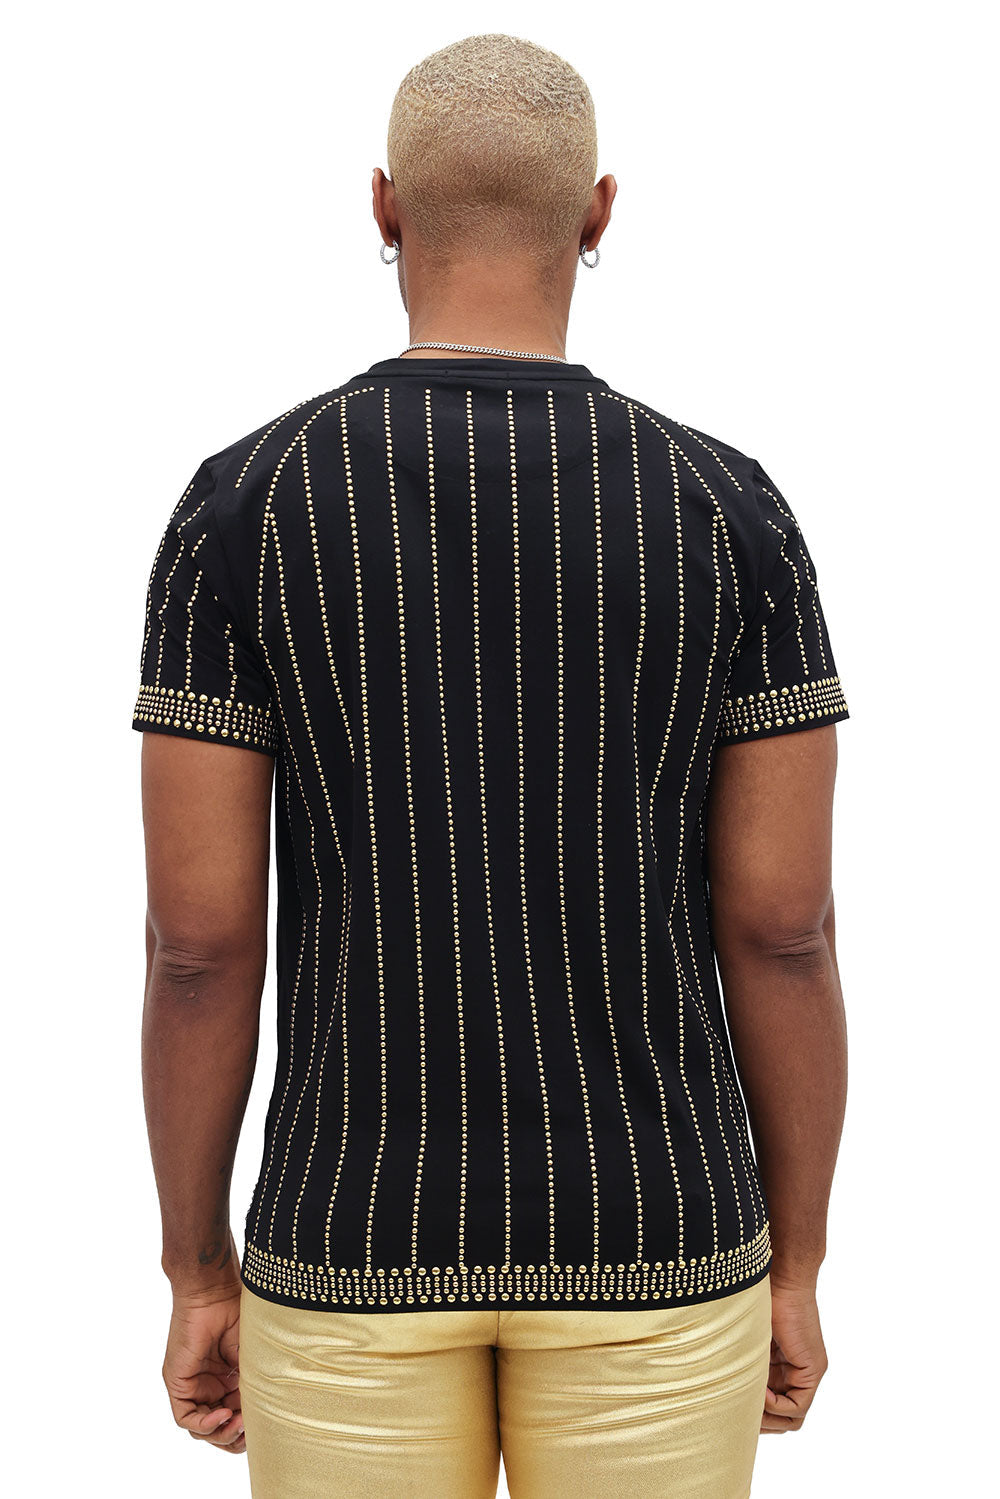 BARABAS Men's Rhinestone Striped Geometric Crew Neck T-Shirt 2STR6 Black Gold